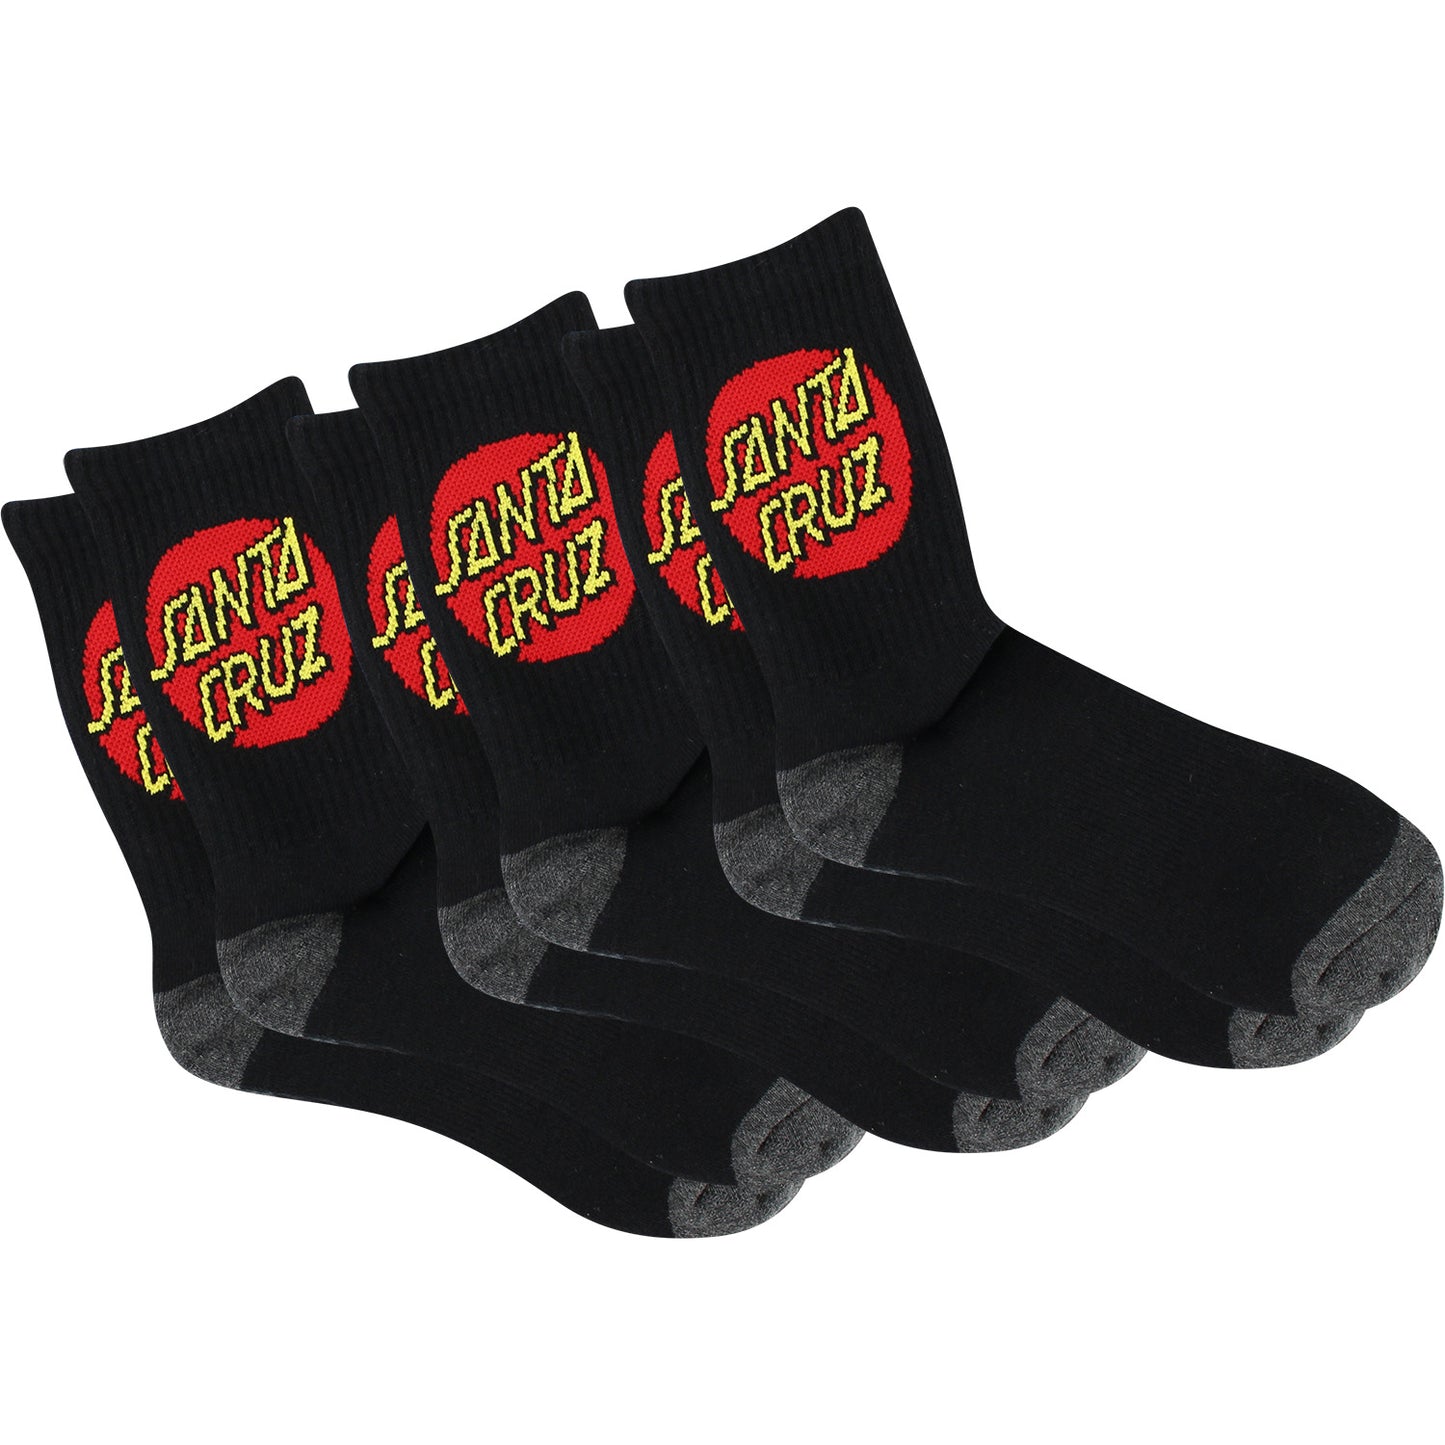 Santa Cruz Skateboards Cruz Logo Black 4 Pack Crew Socks - Youth Size (2-5.5)